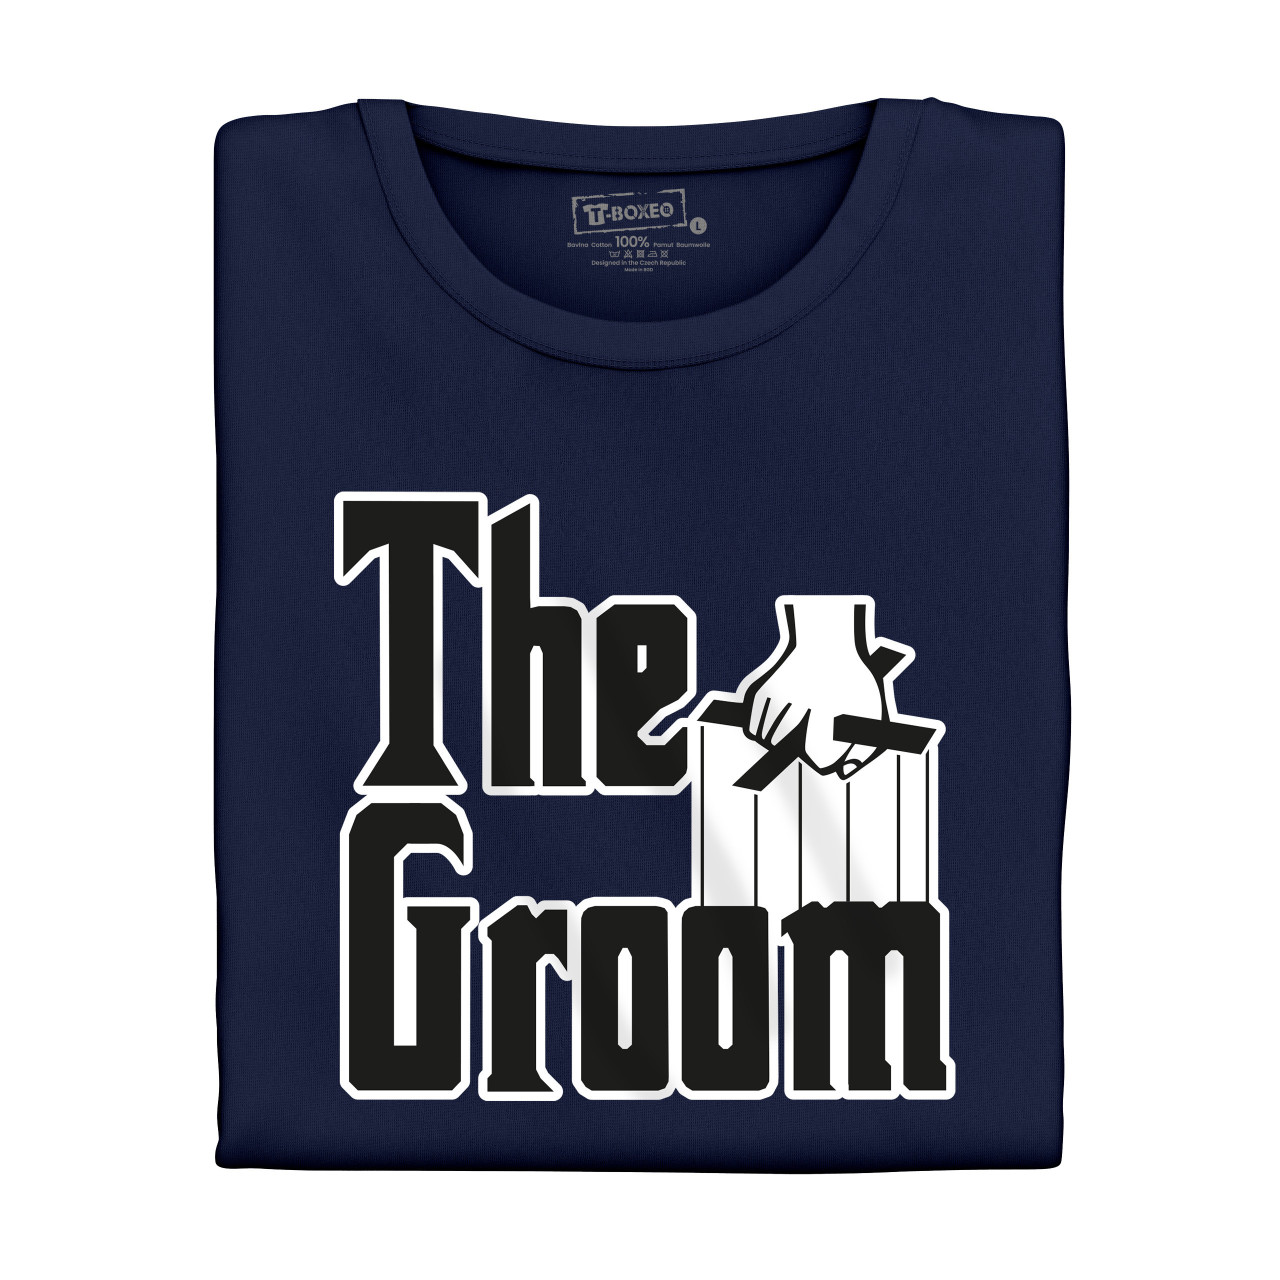 Pánské tričko s potiskem “The Groom”